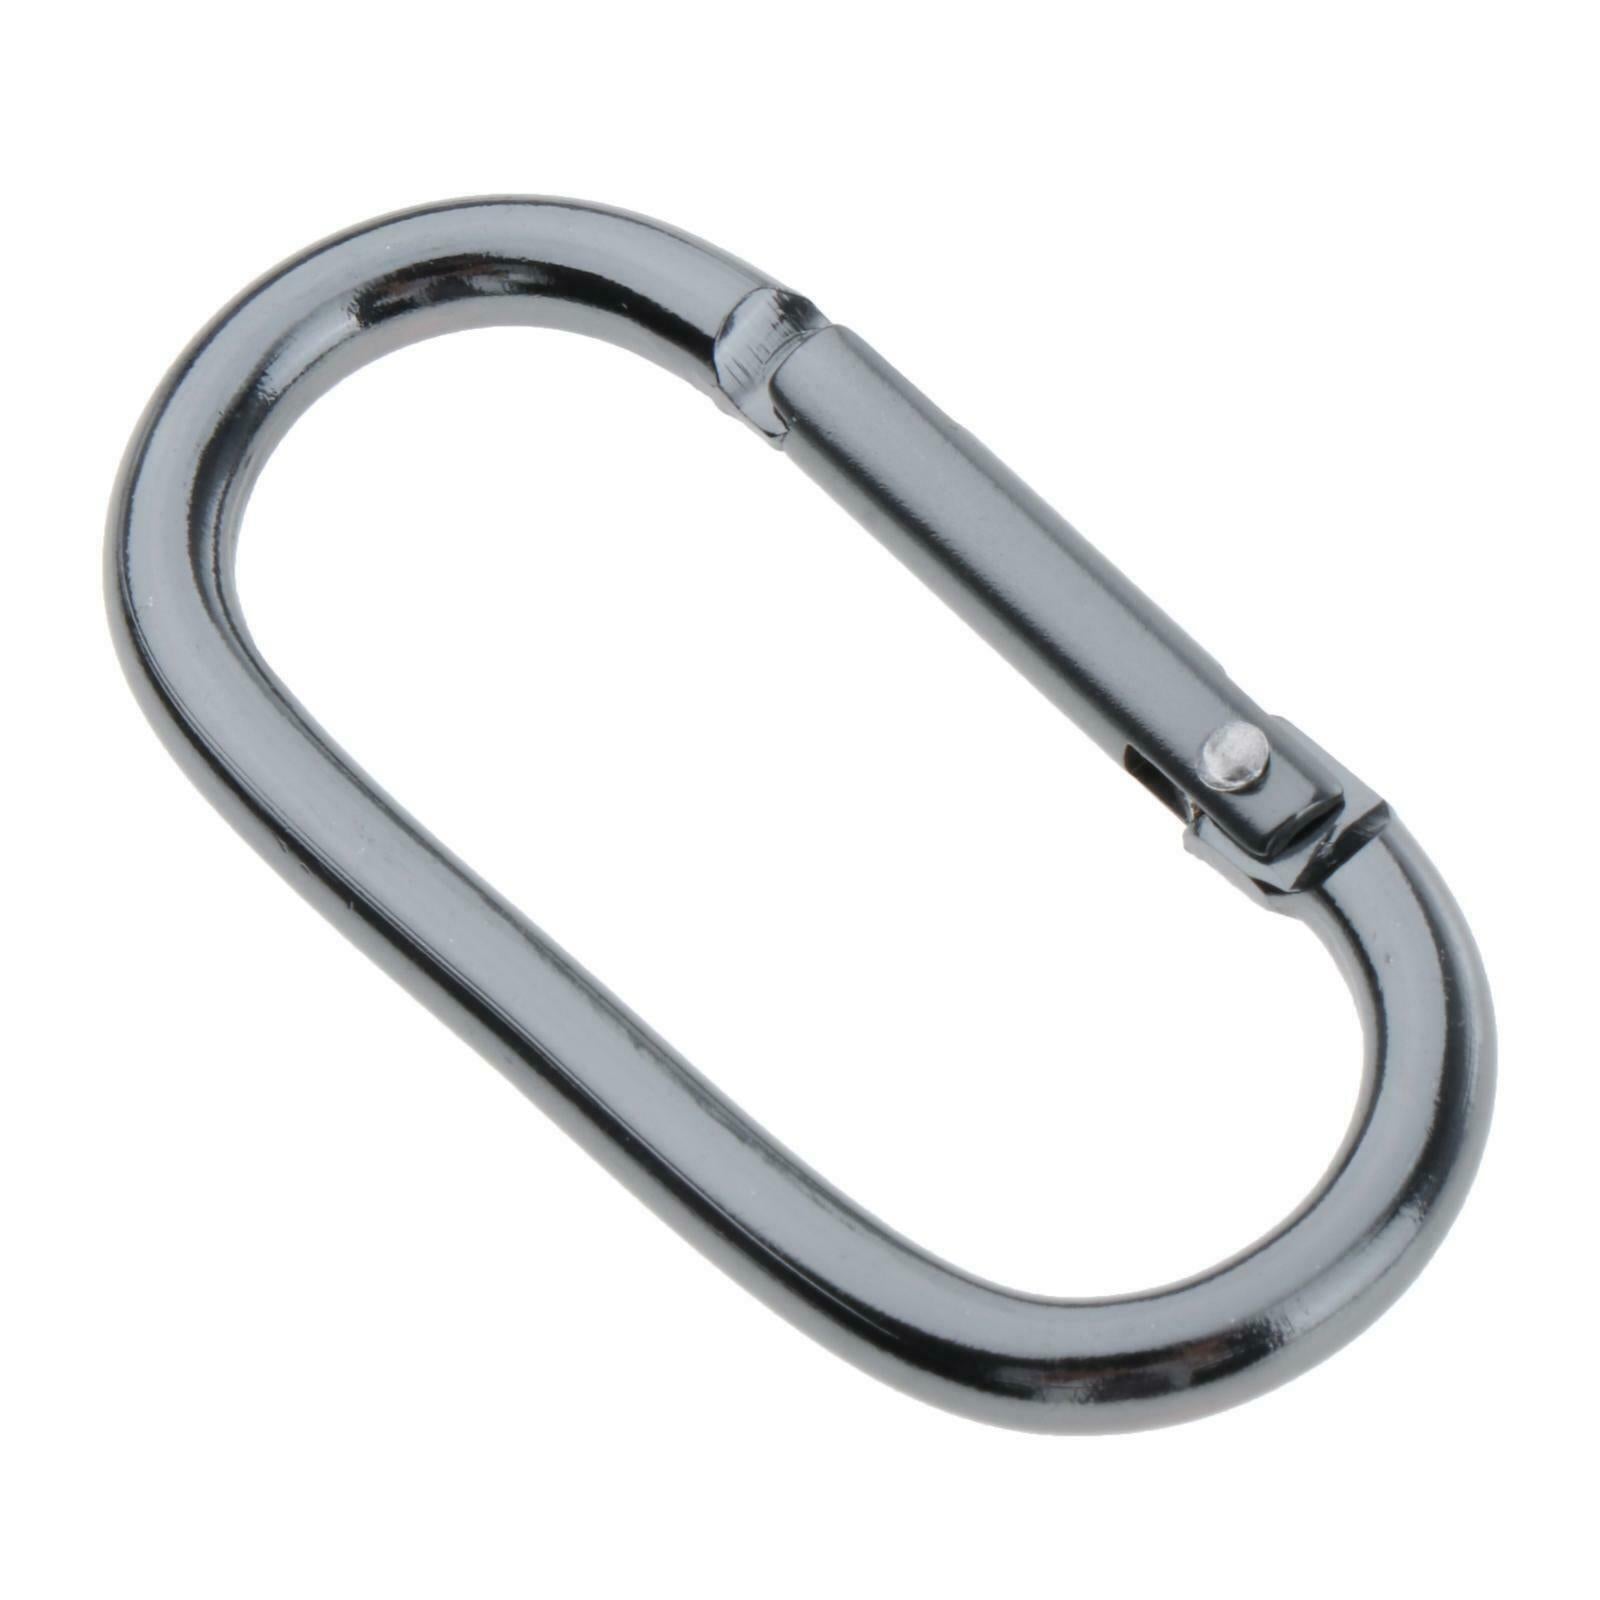 5Pcs Aluminum Snap Hook Carabiner Oval Key Chain Clip Keychain Hiking Camp